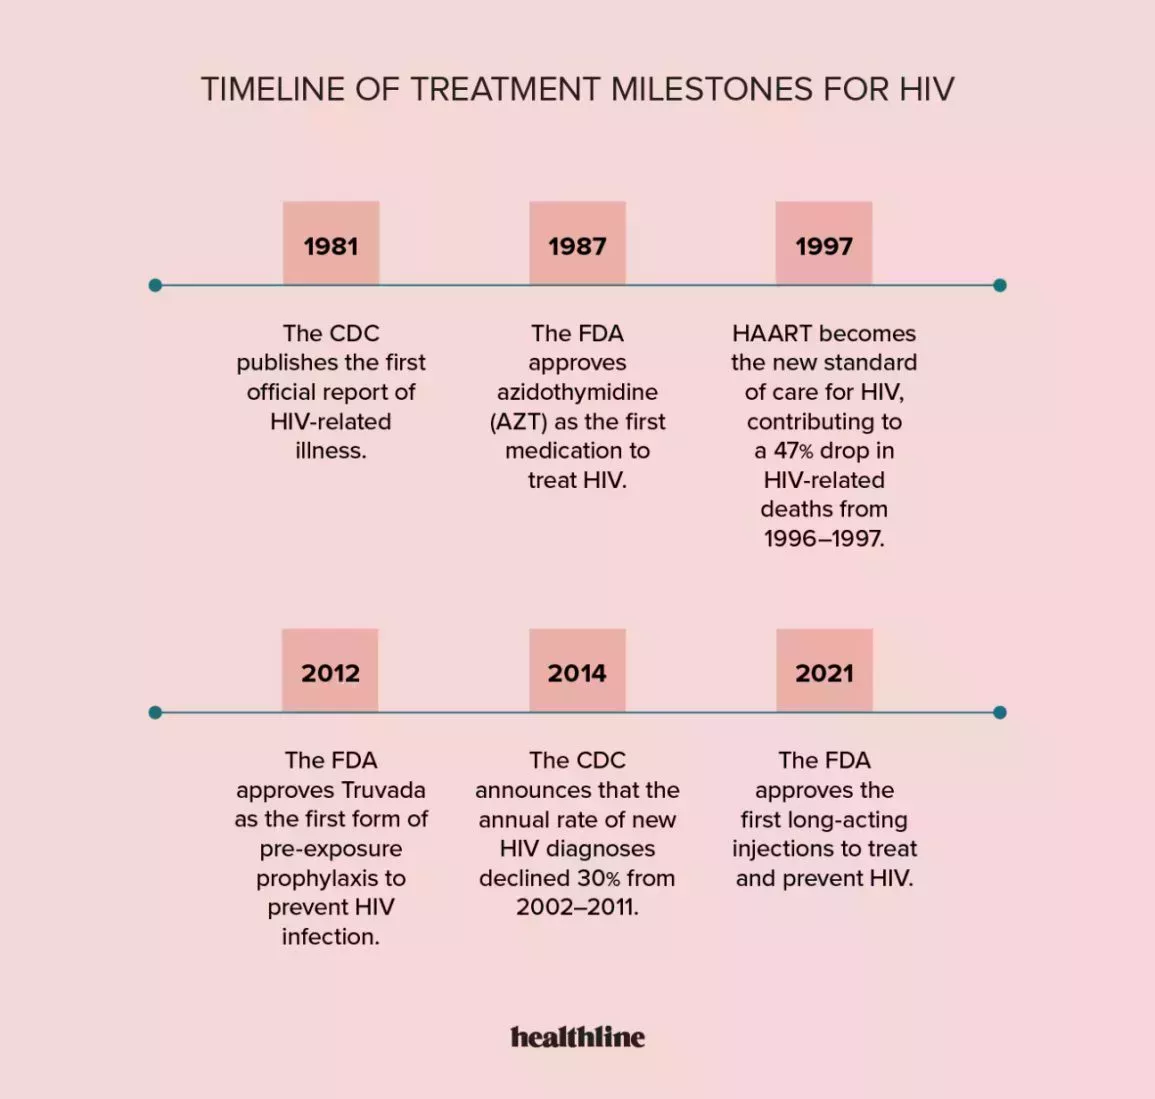 Treatment Milestones for HIV